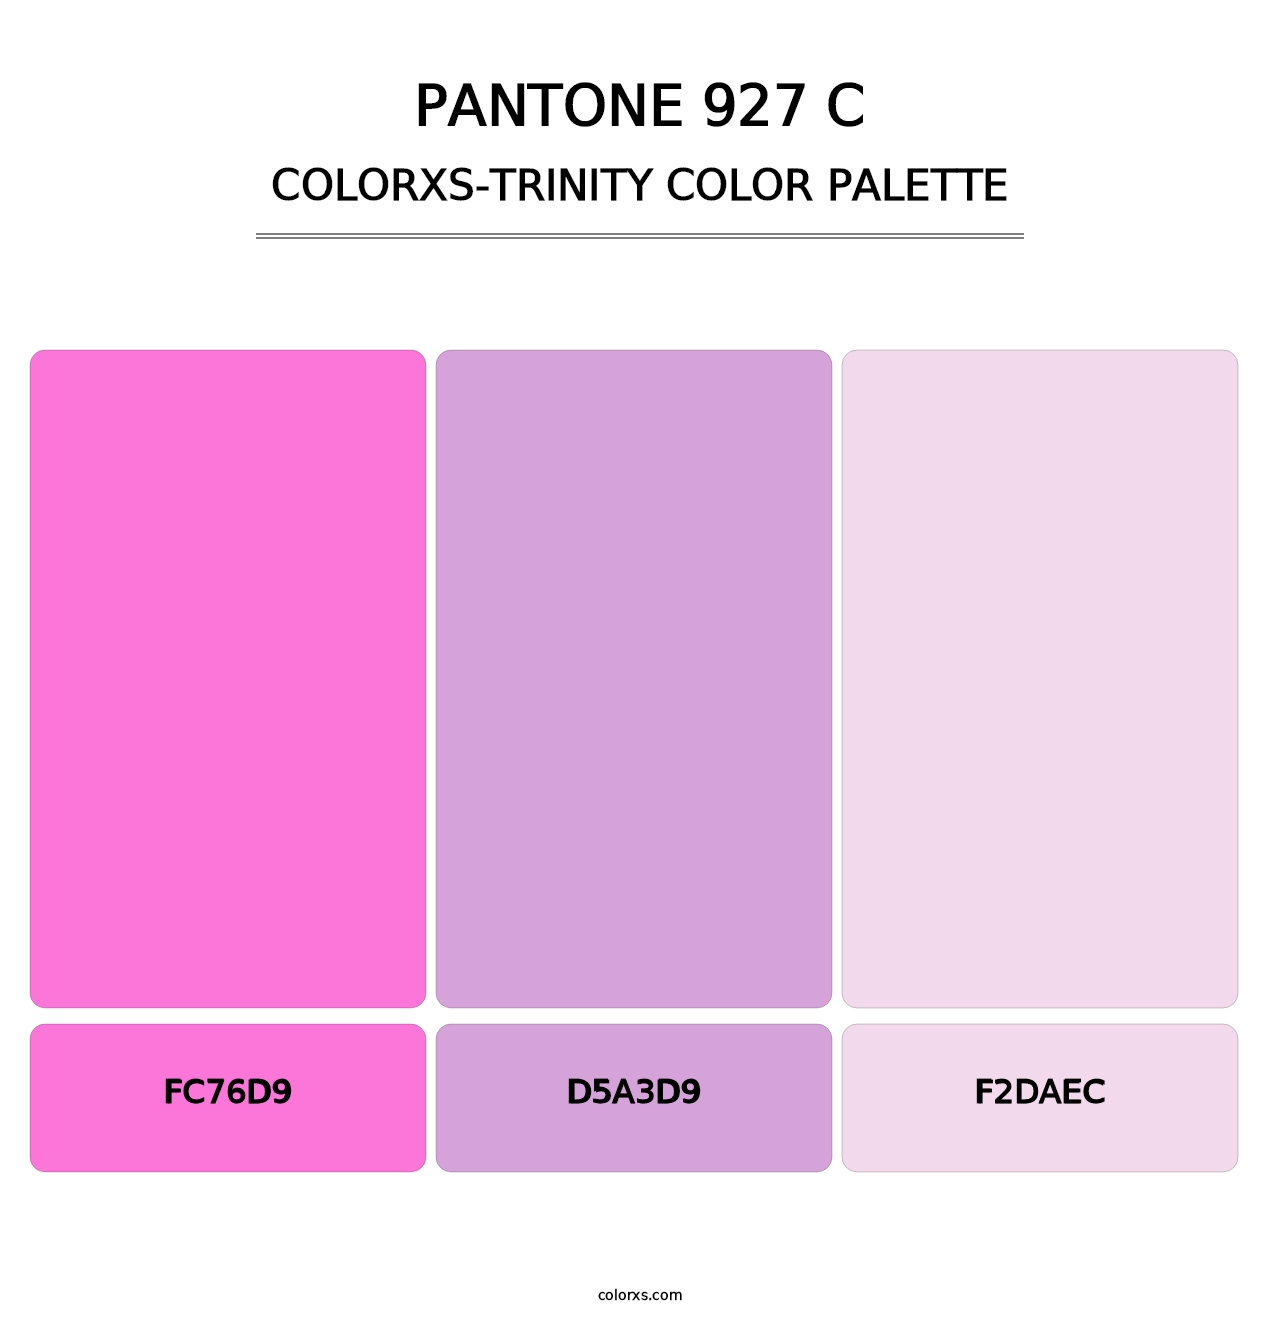 PANTONE 927 C - Colorxs Trinity Palette